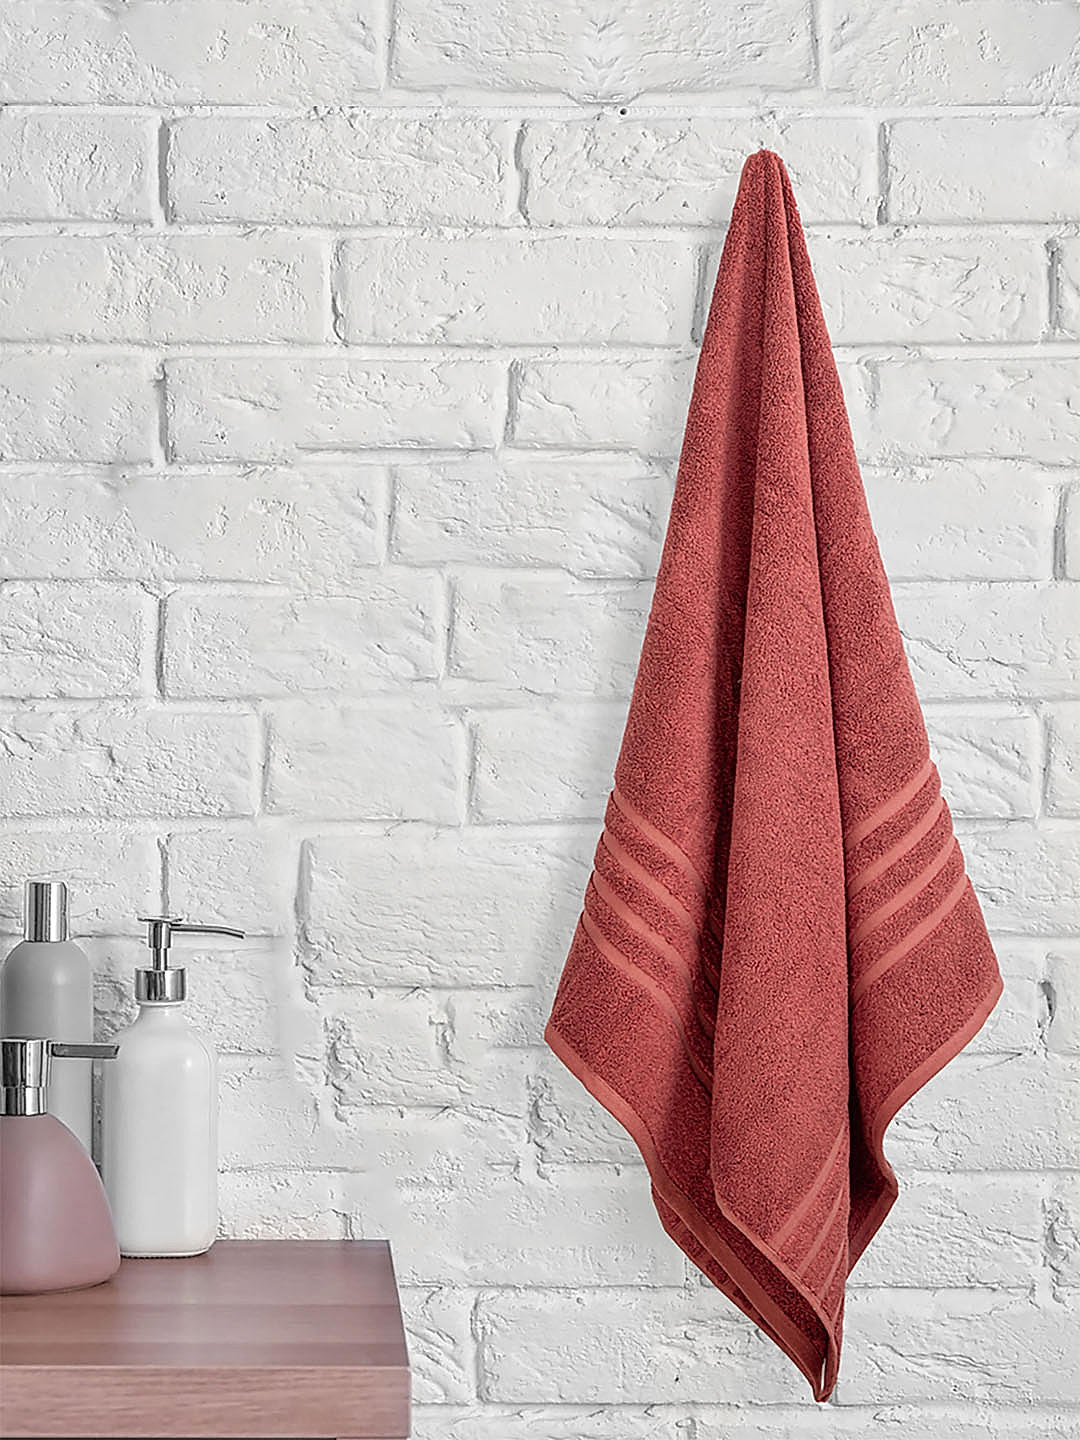 Kalpavriksha 550 gsm 100% Organic Cotton Soft & Fluffy Red Colored Bath Towel